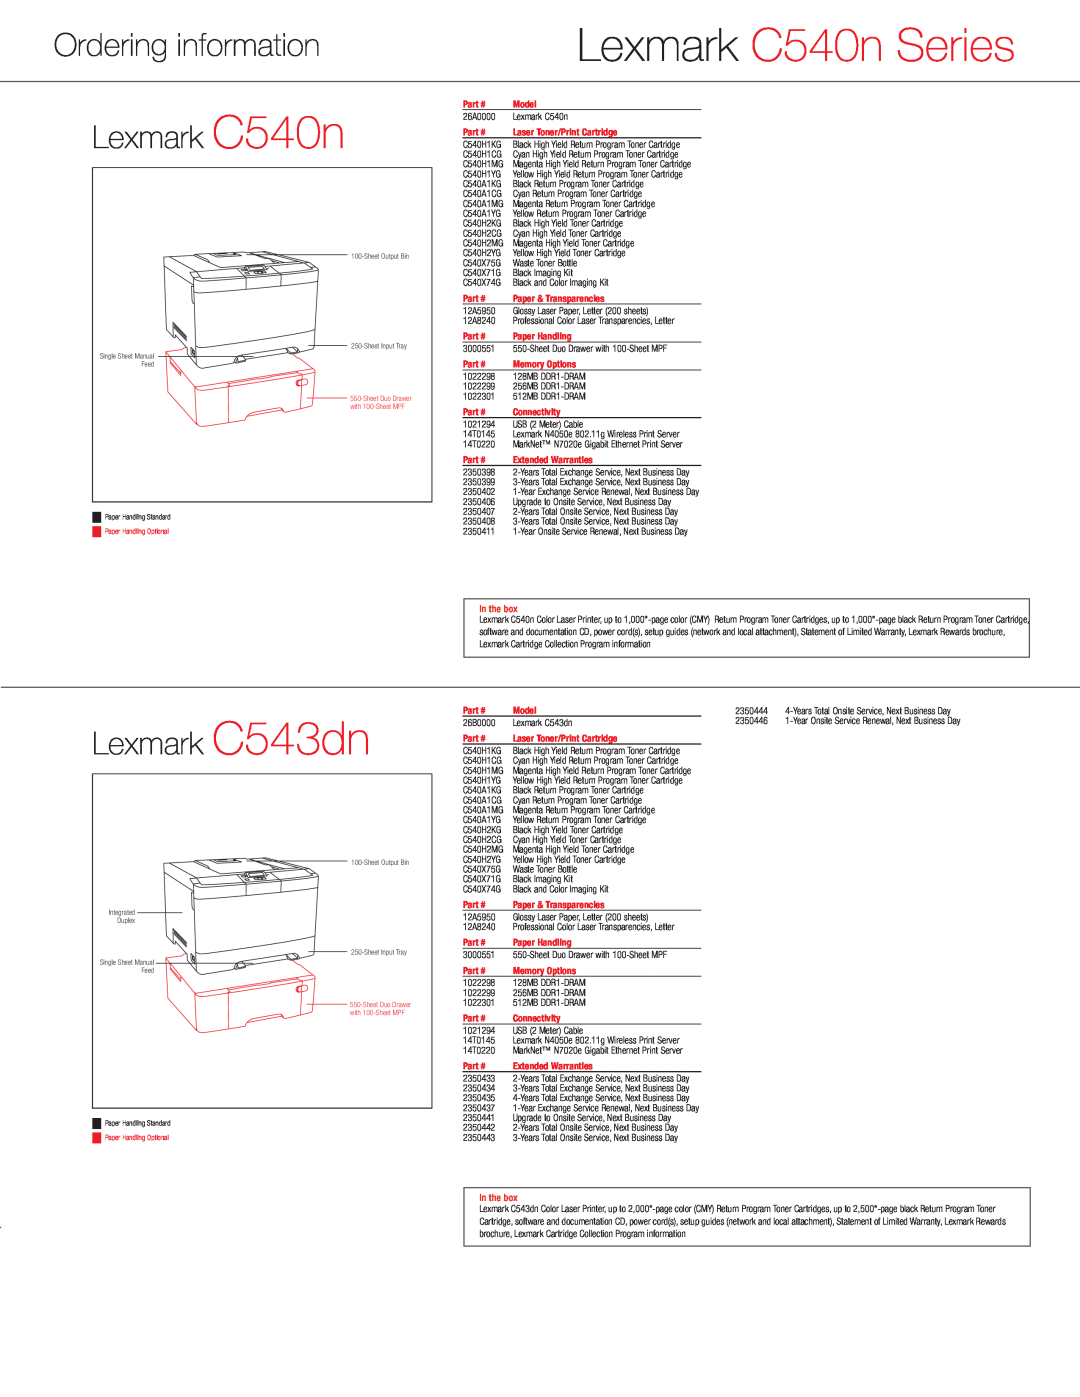 Lexmark C544, C540 Series manual Ordering information, Lexmark C543dn, Lexmark C540n Series, In the box 